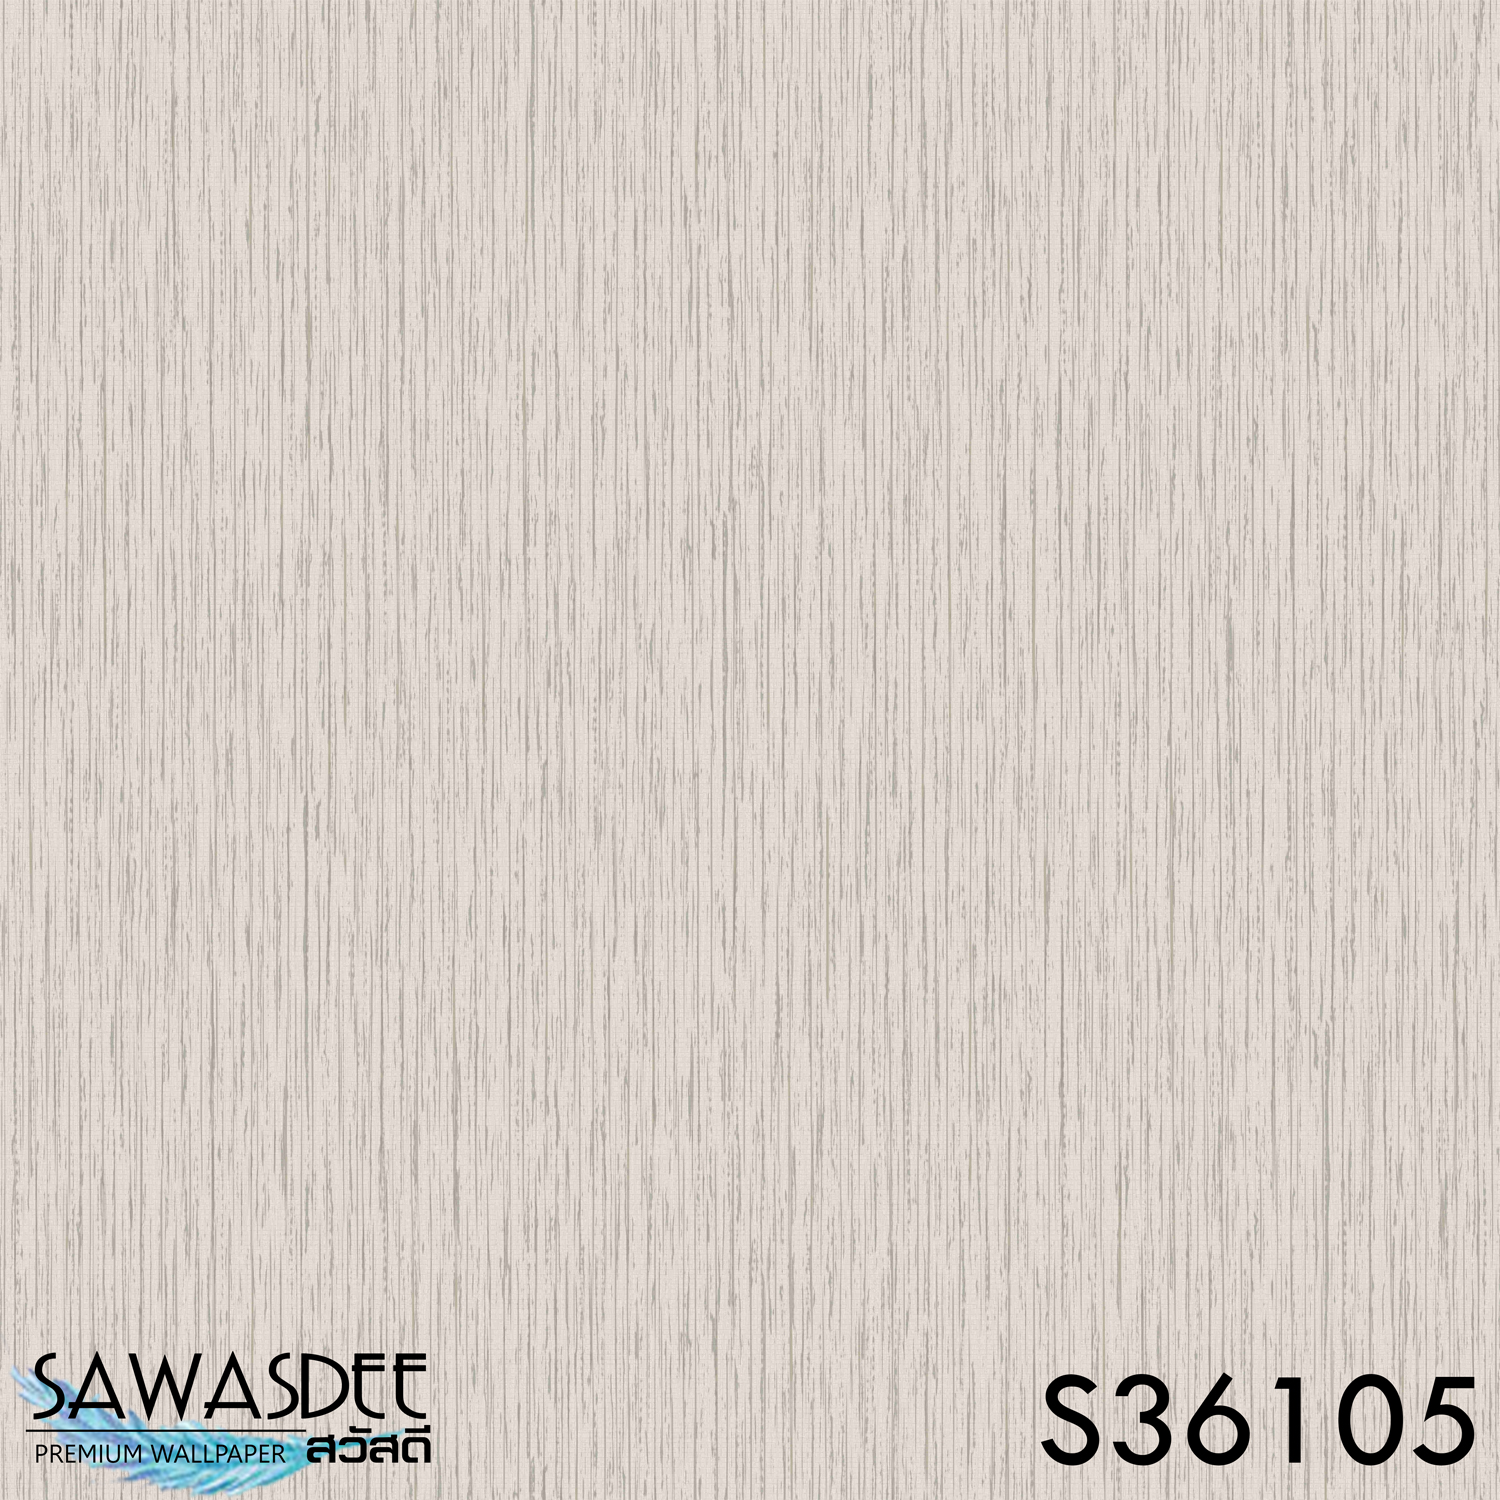 Wallpaper (SAWASDEE) S36105